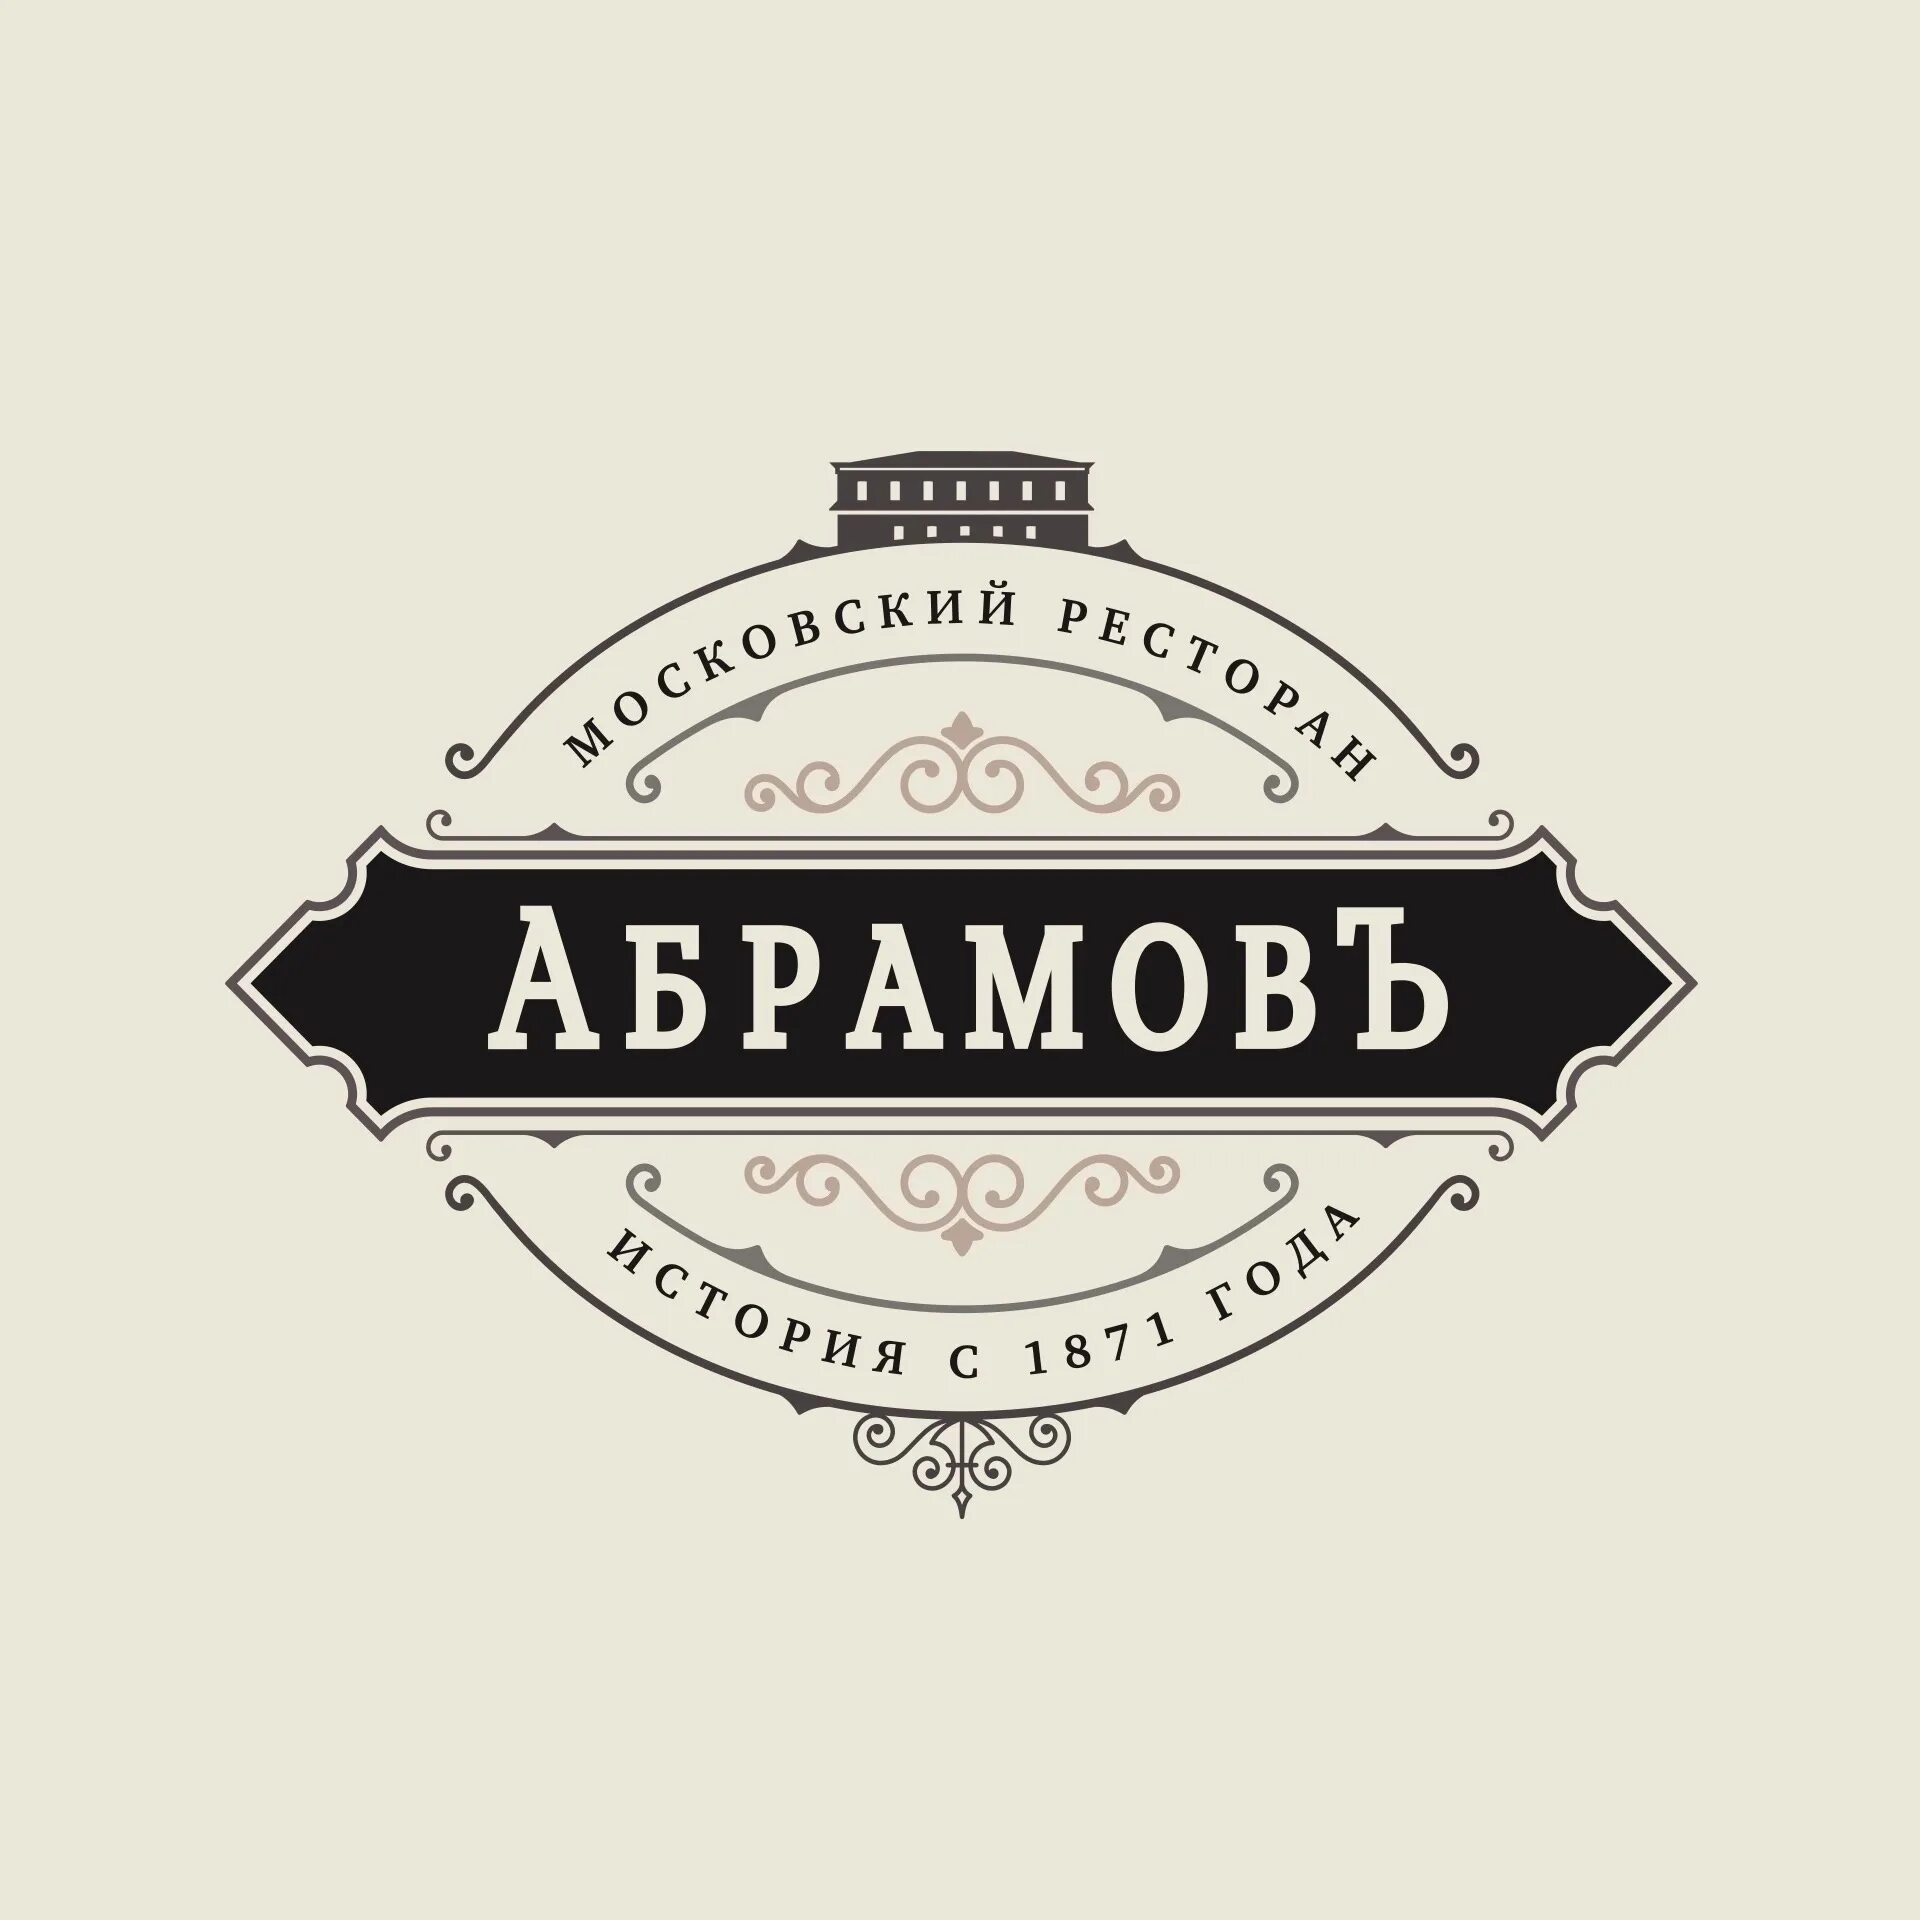 Ресторан Абрамов. Ресторан Абрамов Москва. Абрамов ресторан Москва логотип. Ресторан на полянке Абрамов логотип.